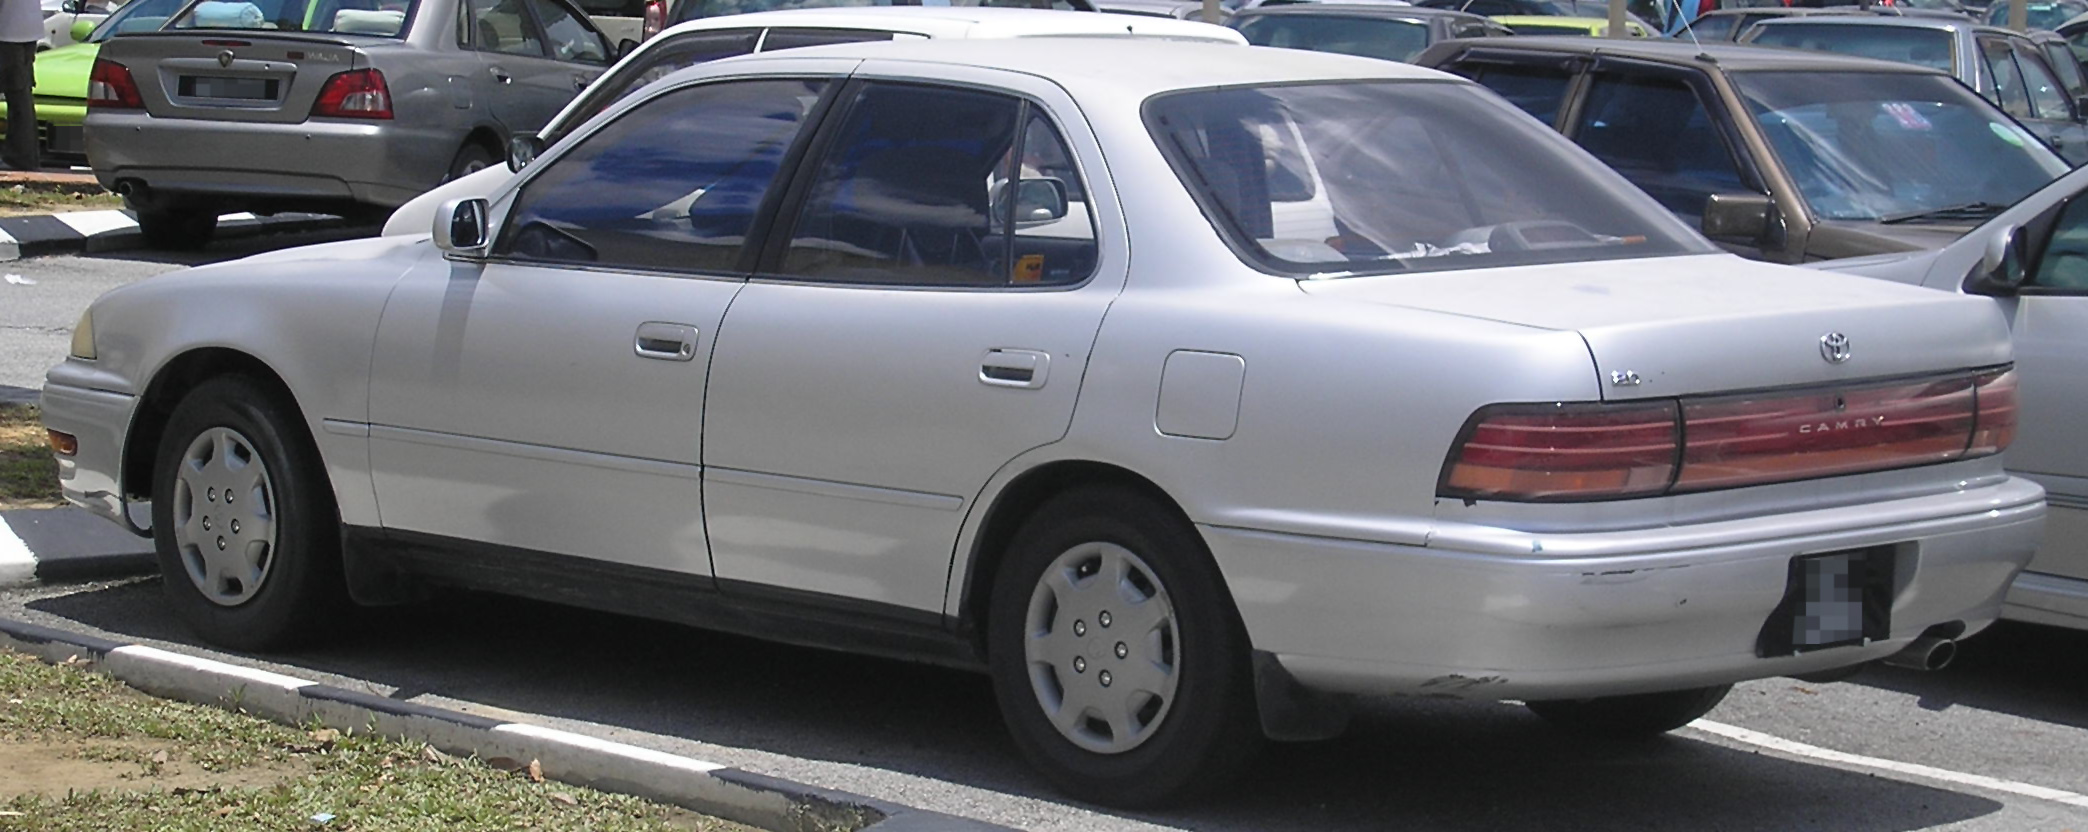 Toyota Vista III (V30) 1990 - 1994 Sedan-Hardtop #2